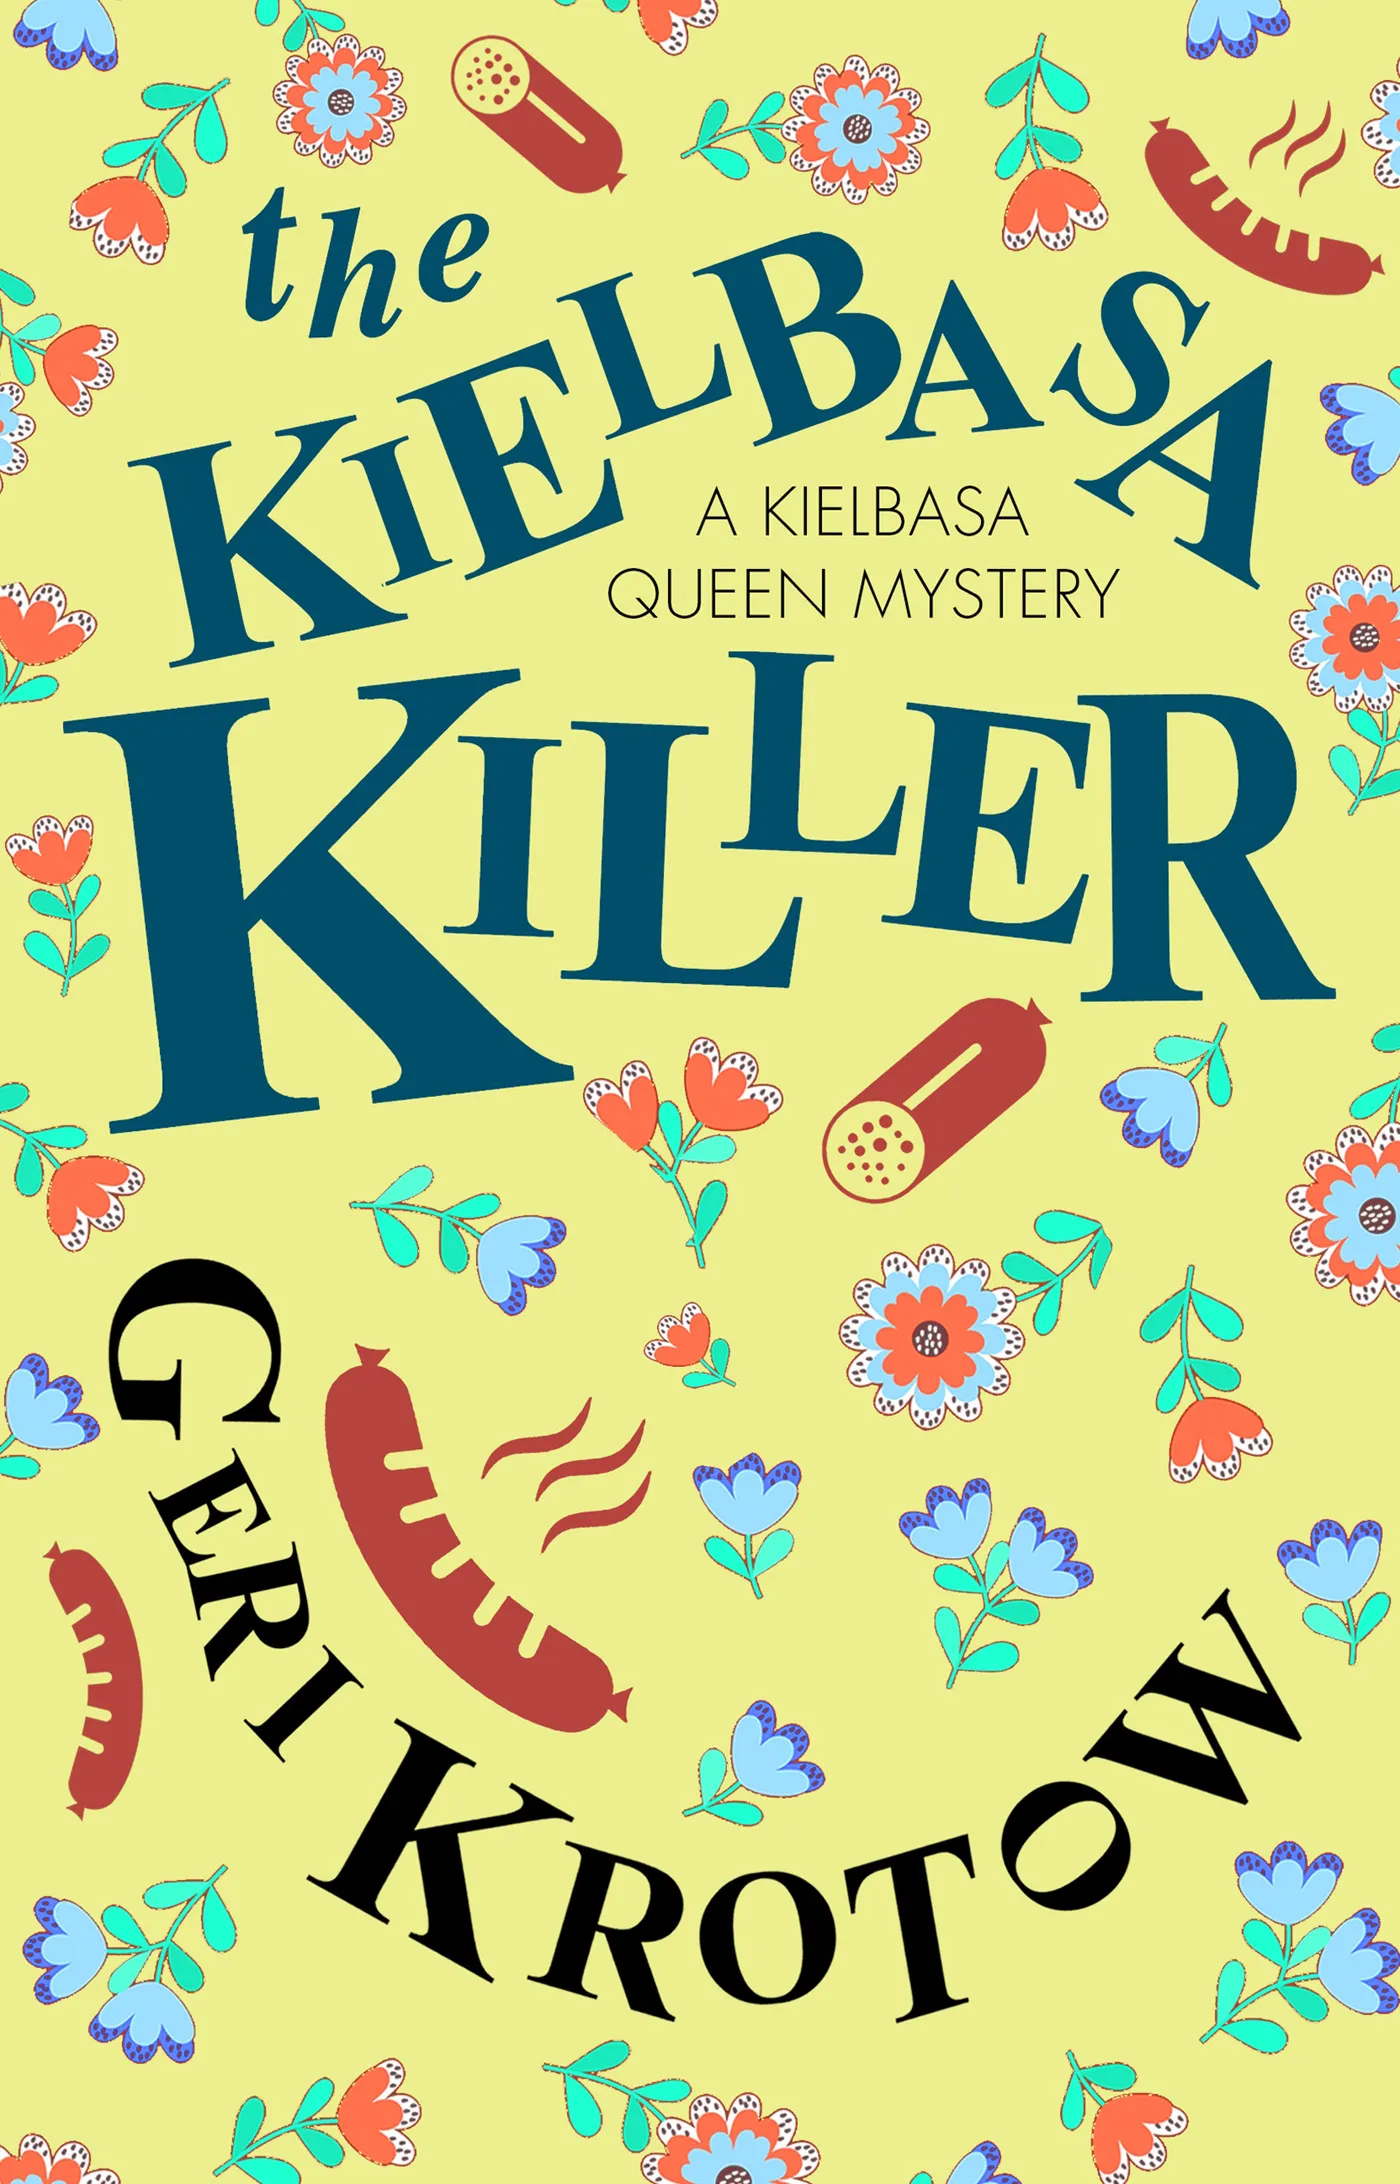 The Kielbasa Killer (A Kielbasa Queen Mystery #1)